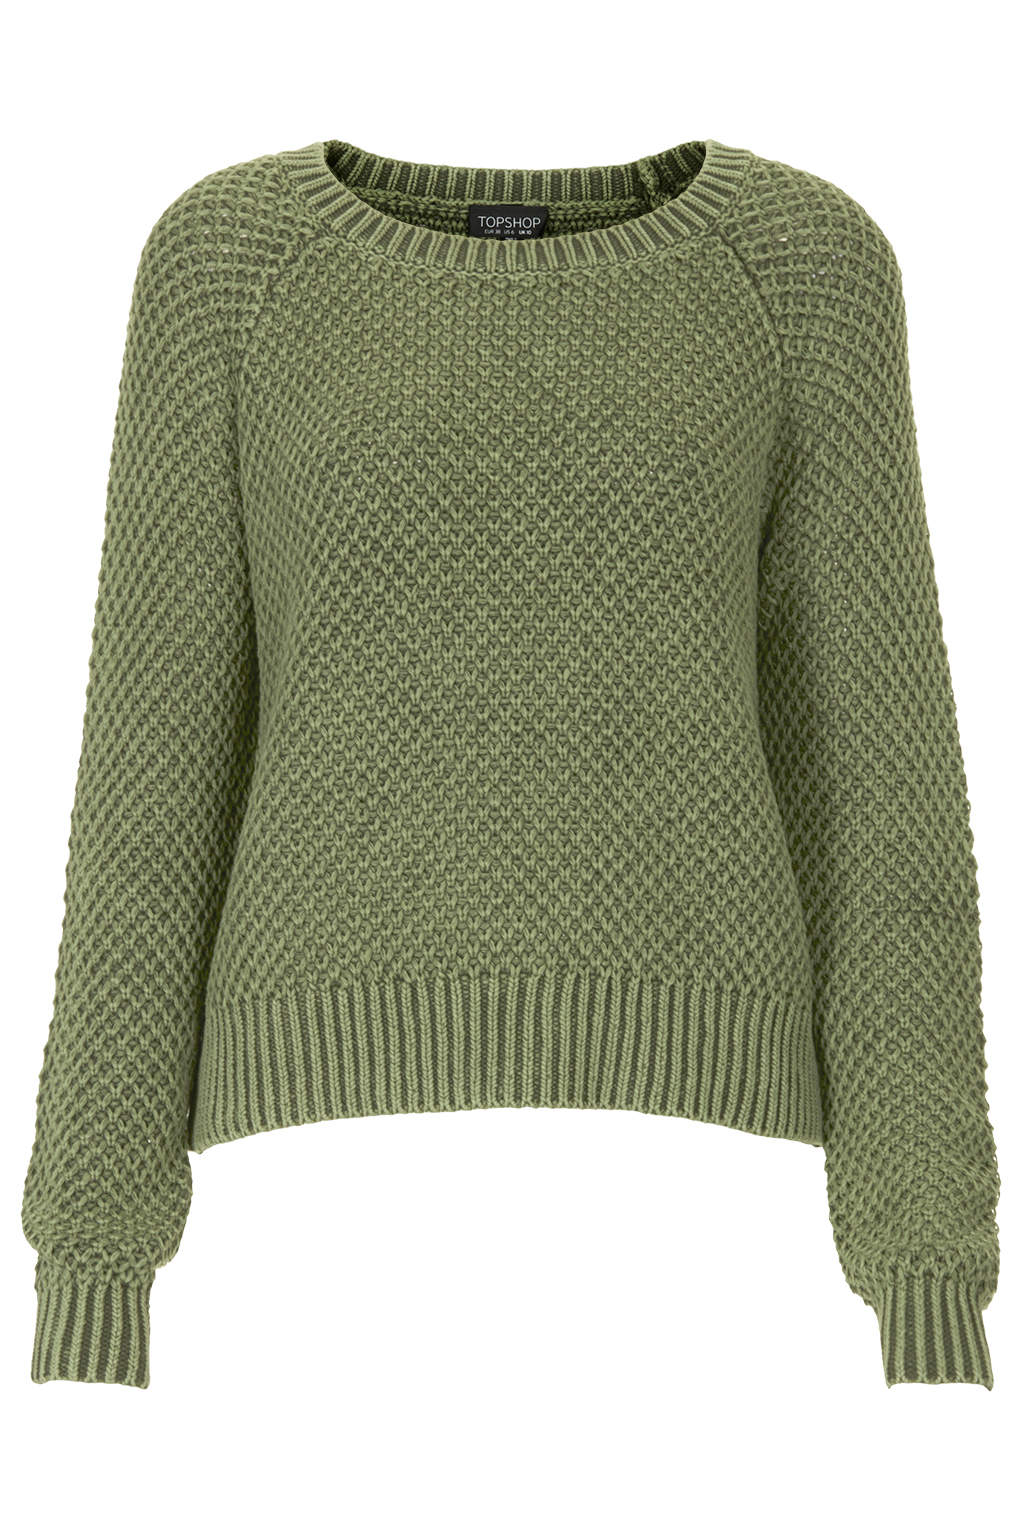 Topshop Acid Wash Sweater in Green (Khaki) | Lyst